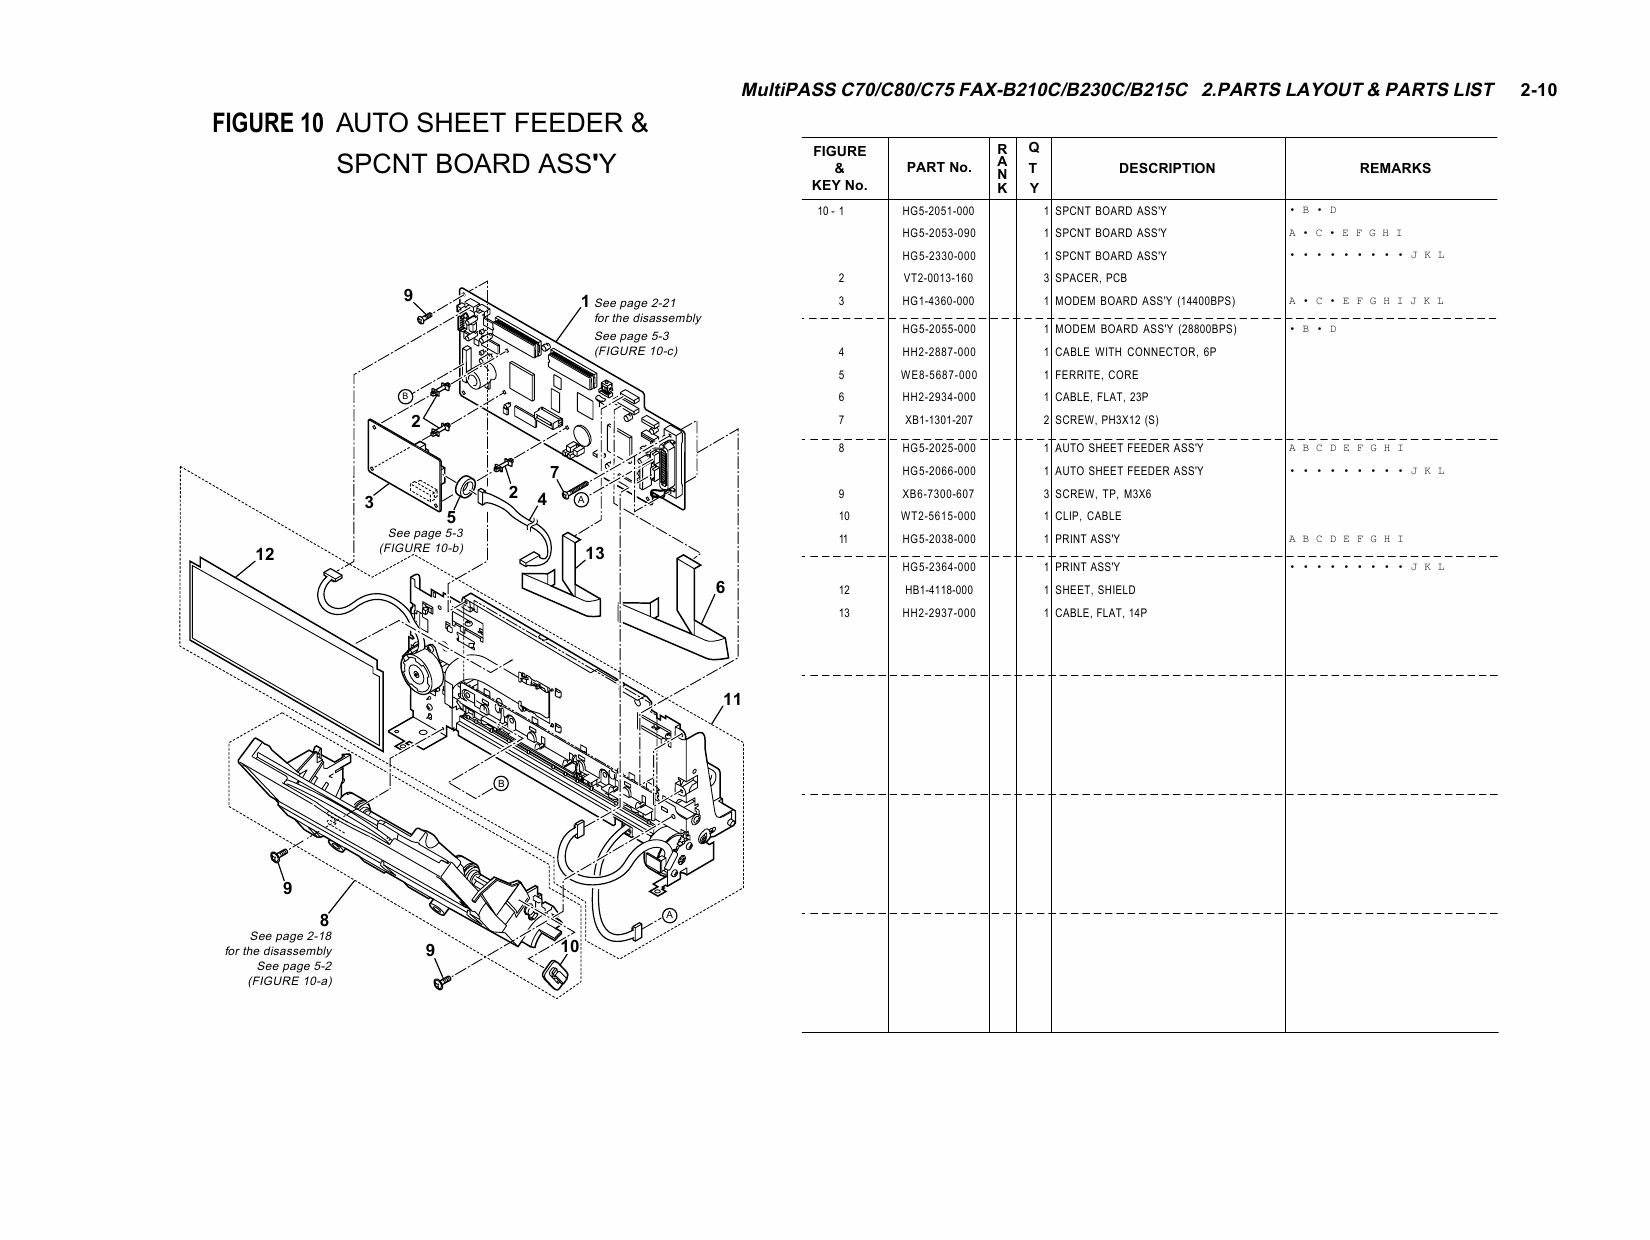 Canon FAX B210C B230C B215C Parts Catalog Manual-4